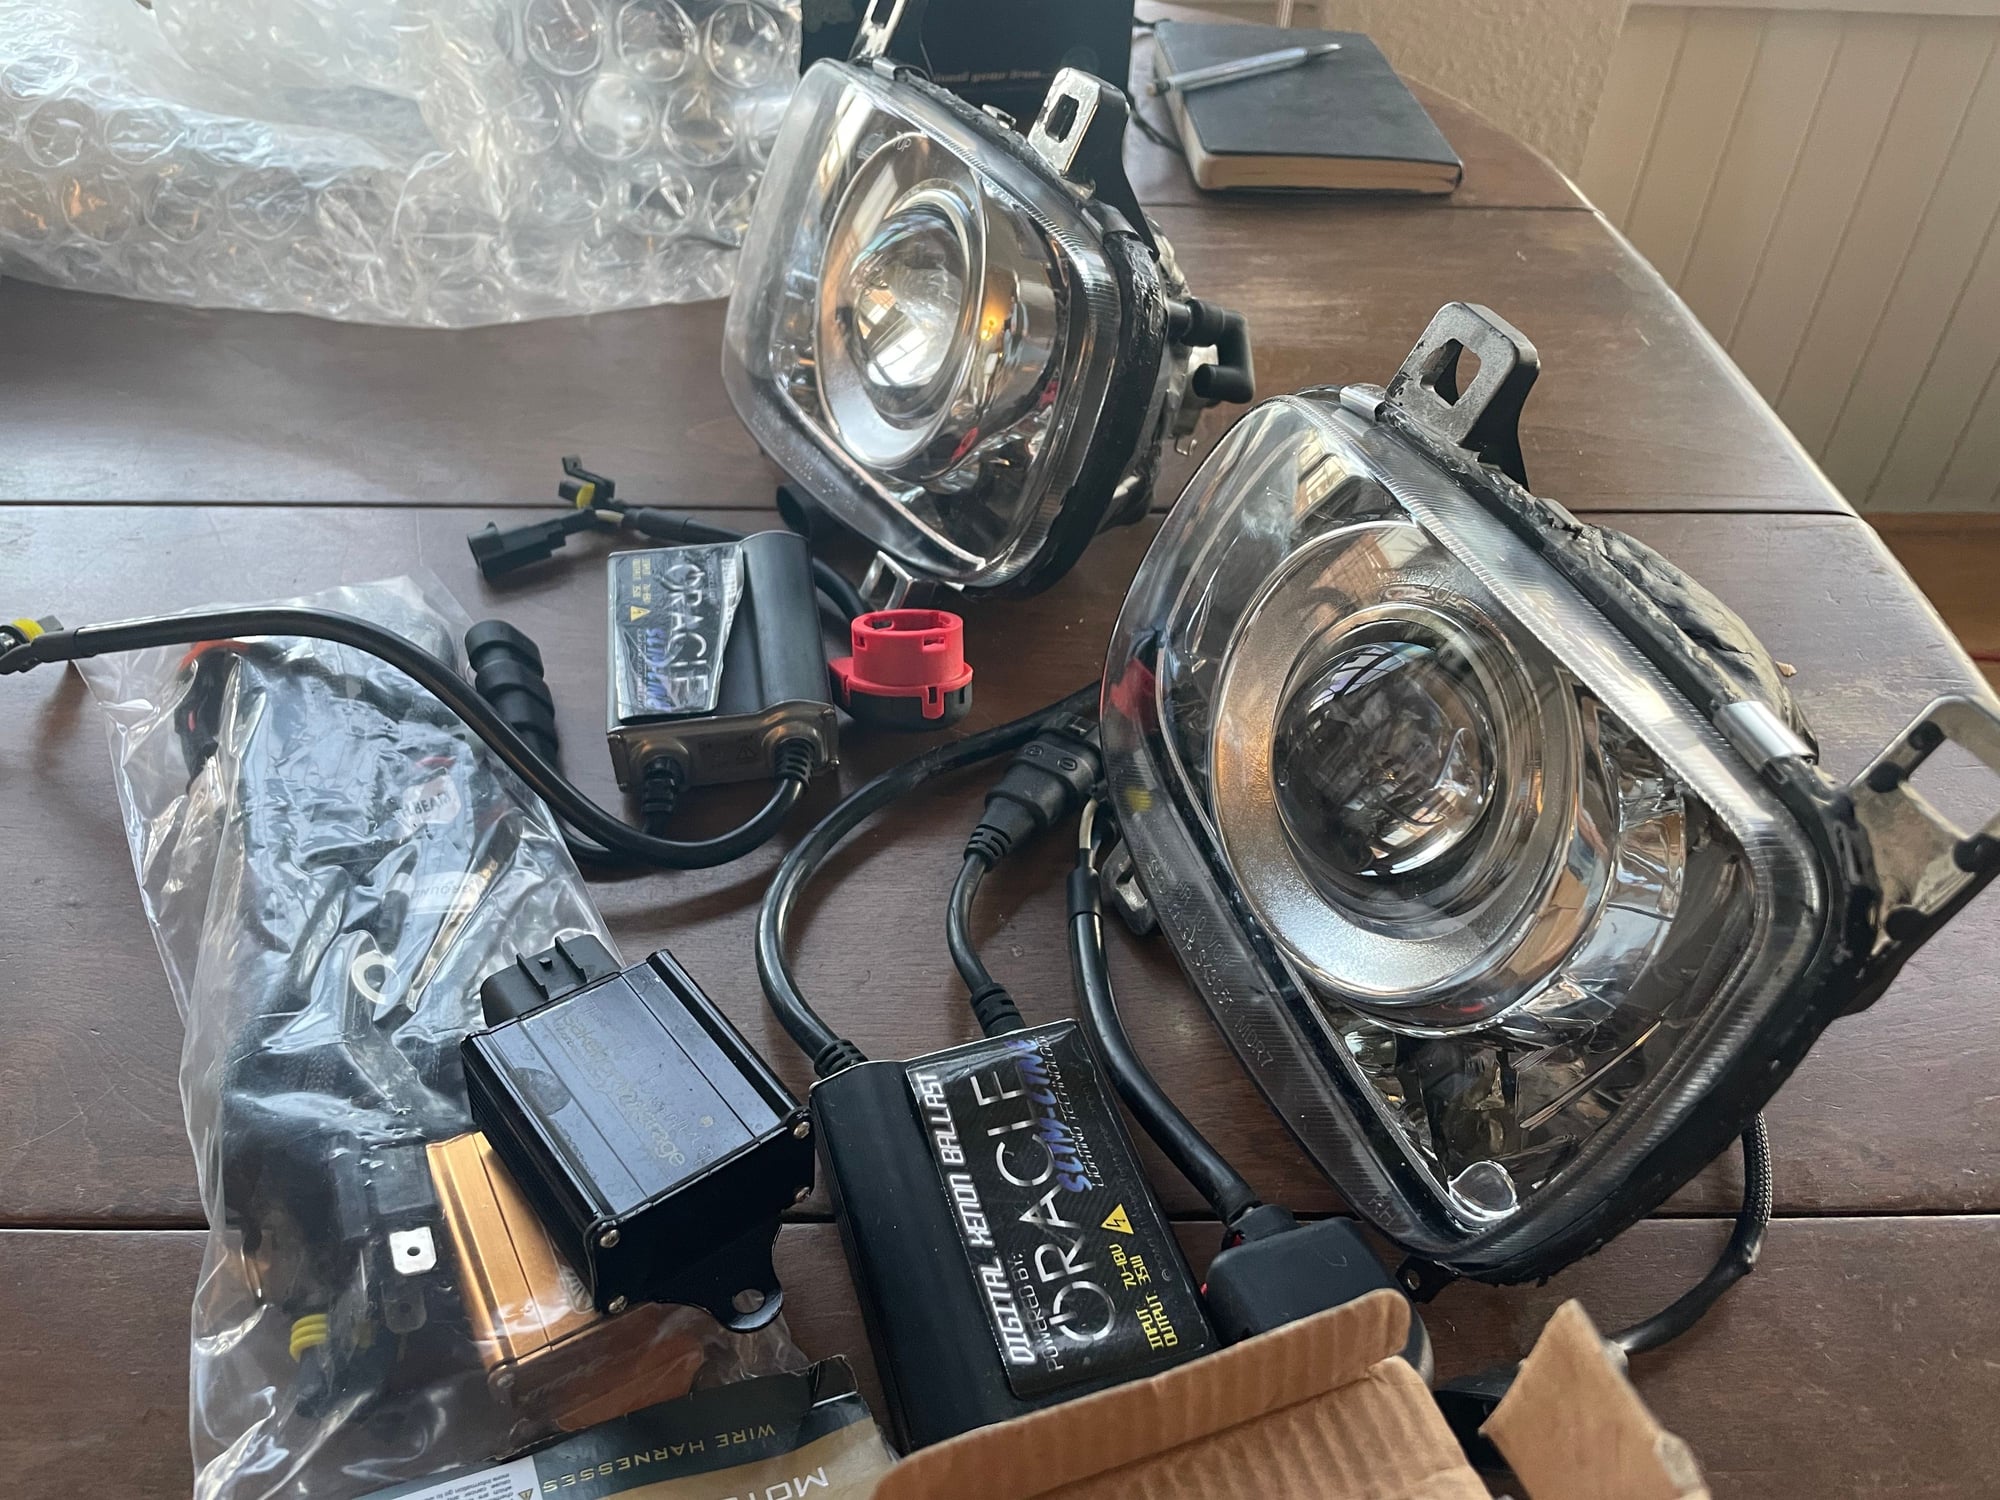 Lights - SBG HID headlights - Used - 1993 to 1995 Mazda RX-7 - Santa Cruz, CA 95060, United States